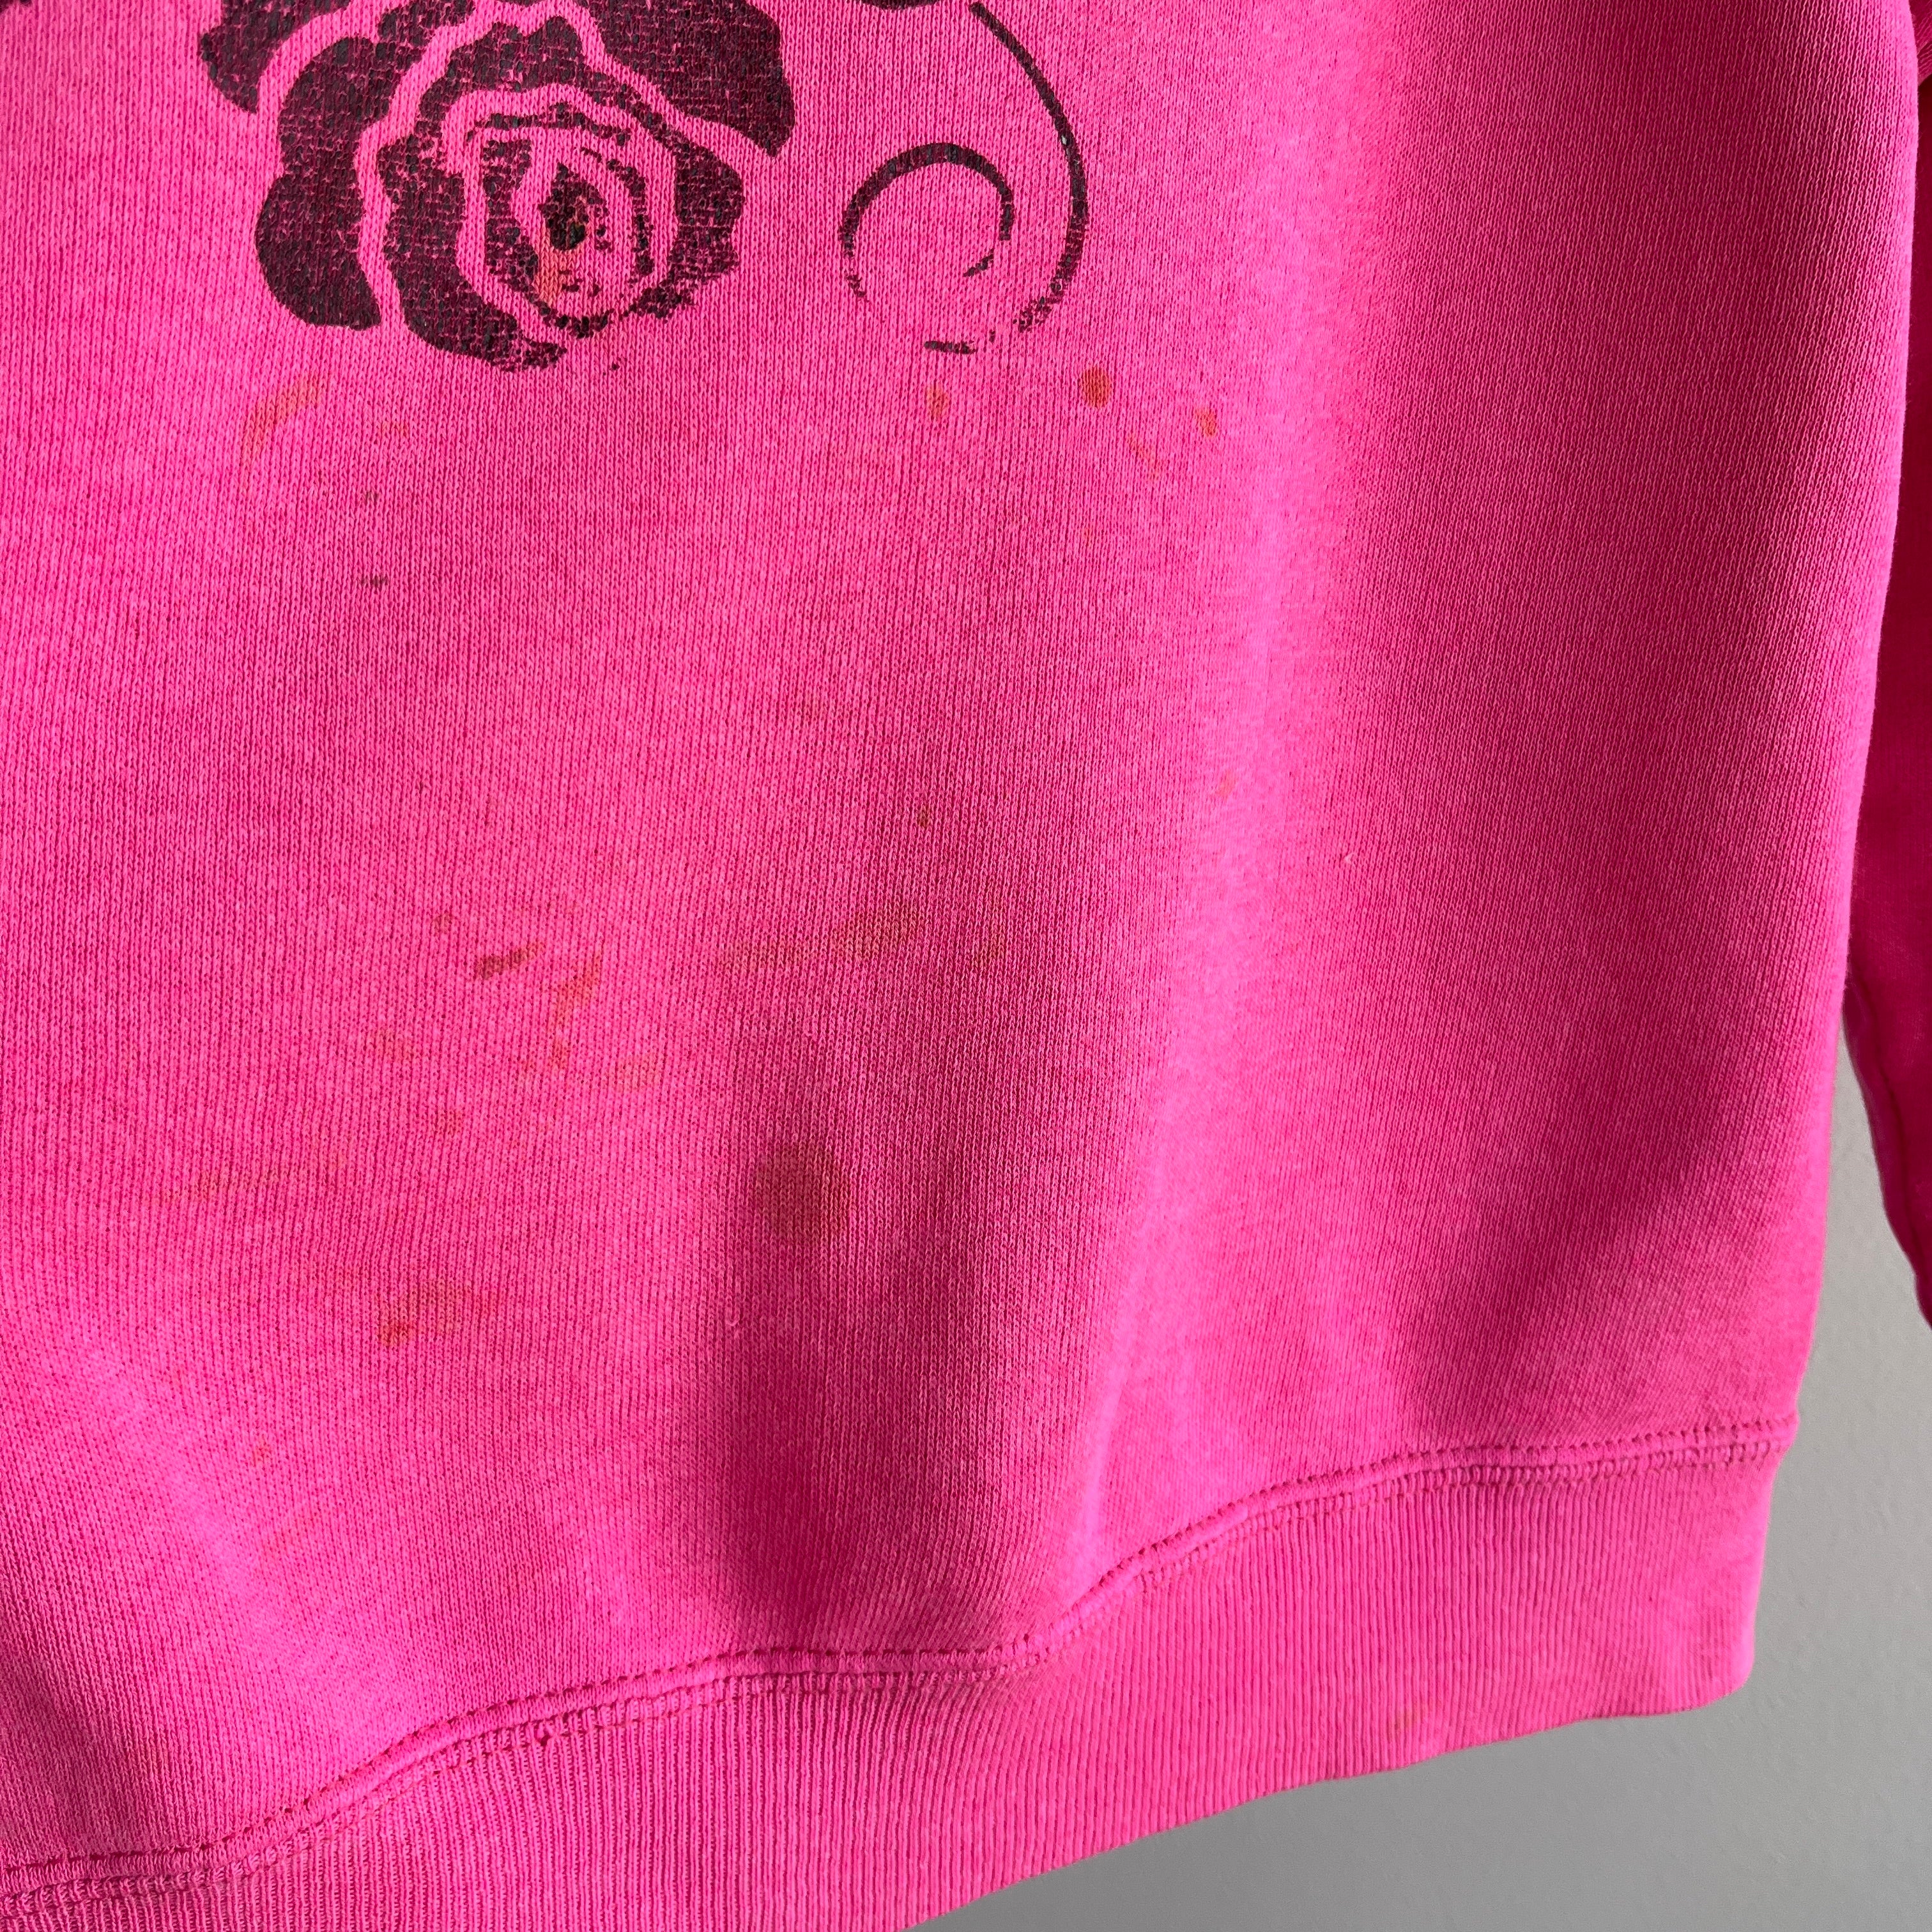 1980s Hot Faded Pink Roses Sweatshirt